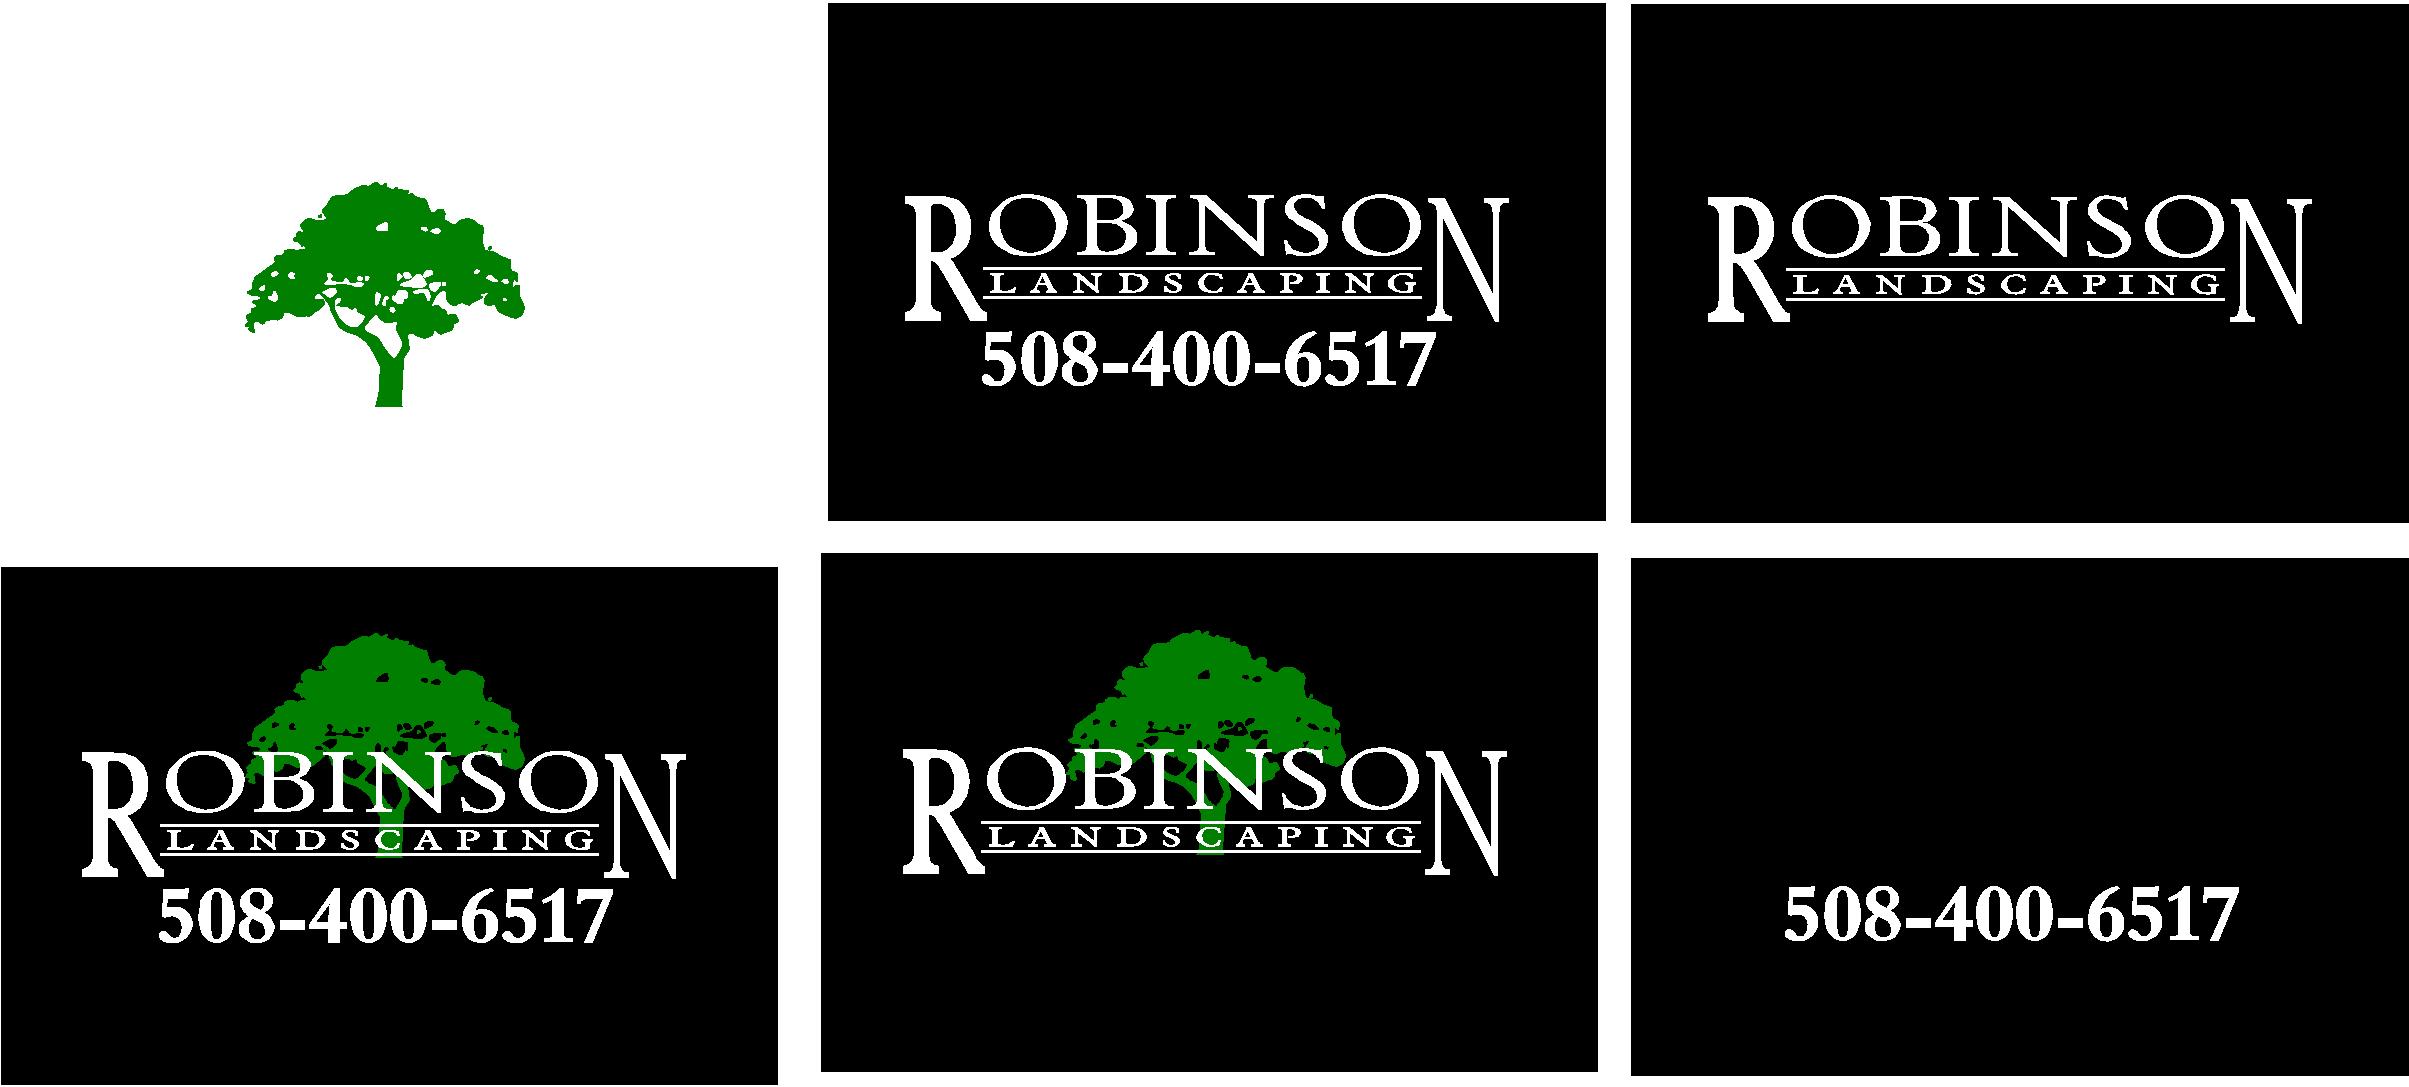 Robinson Landscaping Logo